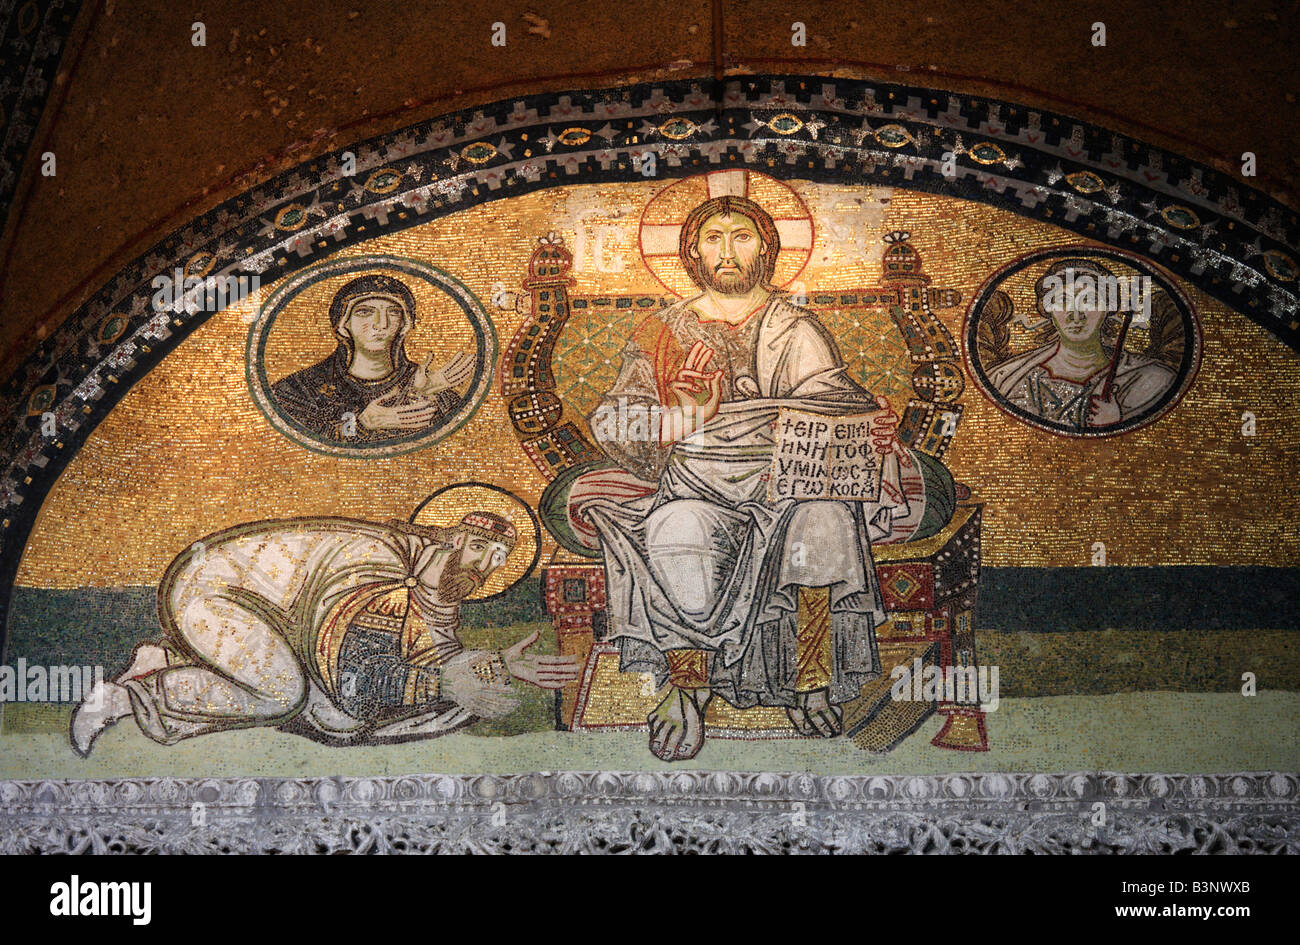 Imperial gate mosaics, Hagia Sophia, Istanbul, Turkey Stock Photo